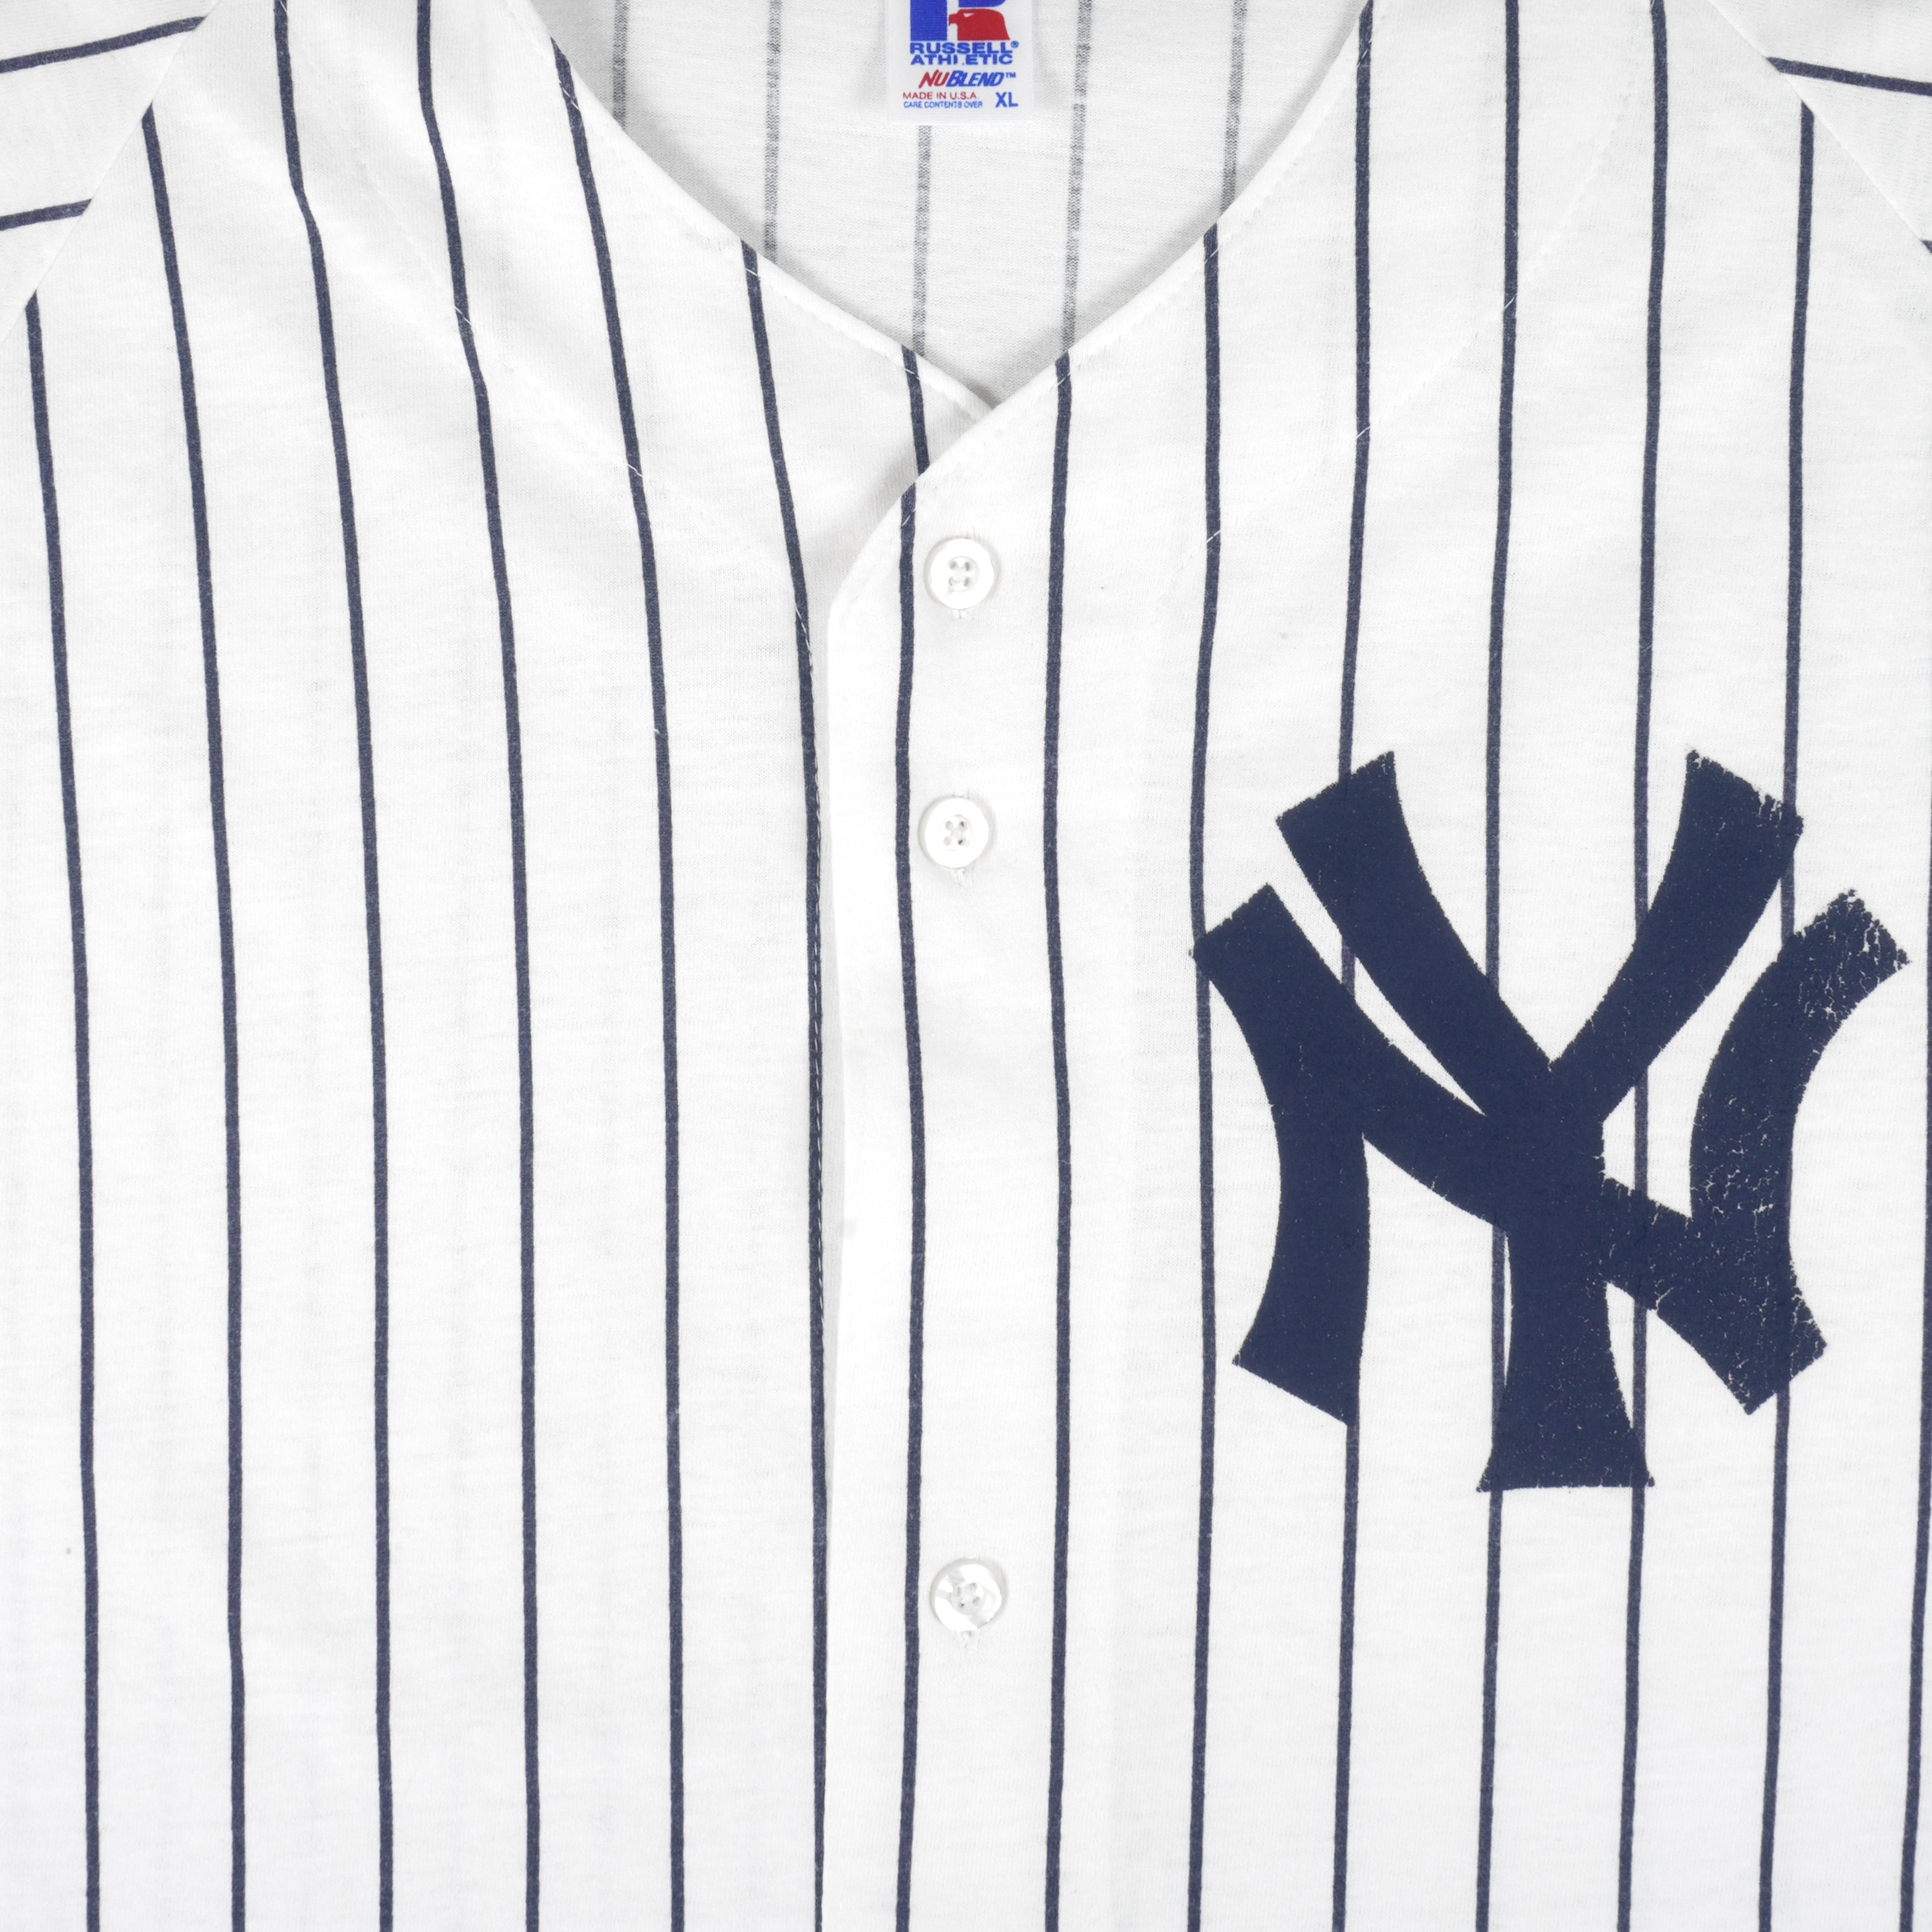 New York Yankees Team-Issued White Pinstripe Postseason Jersey from the  2017 MLB Postseason - Size 42